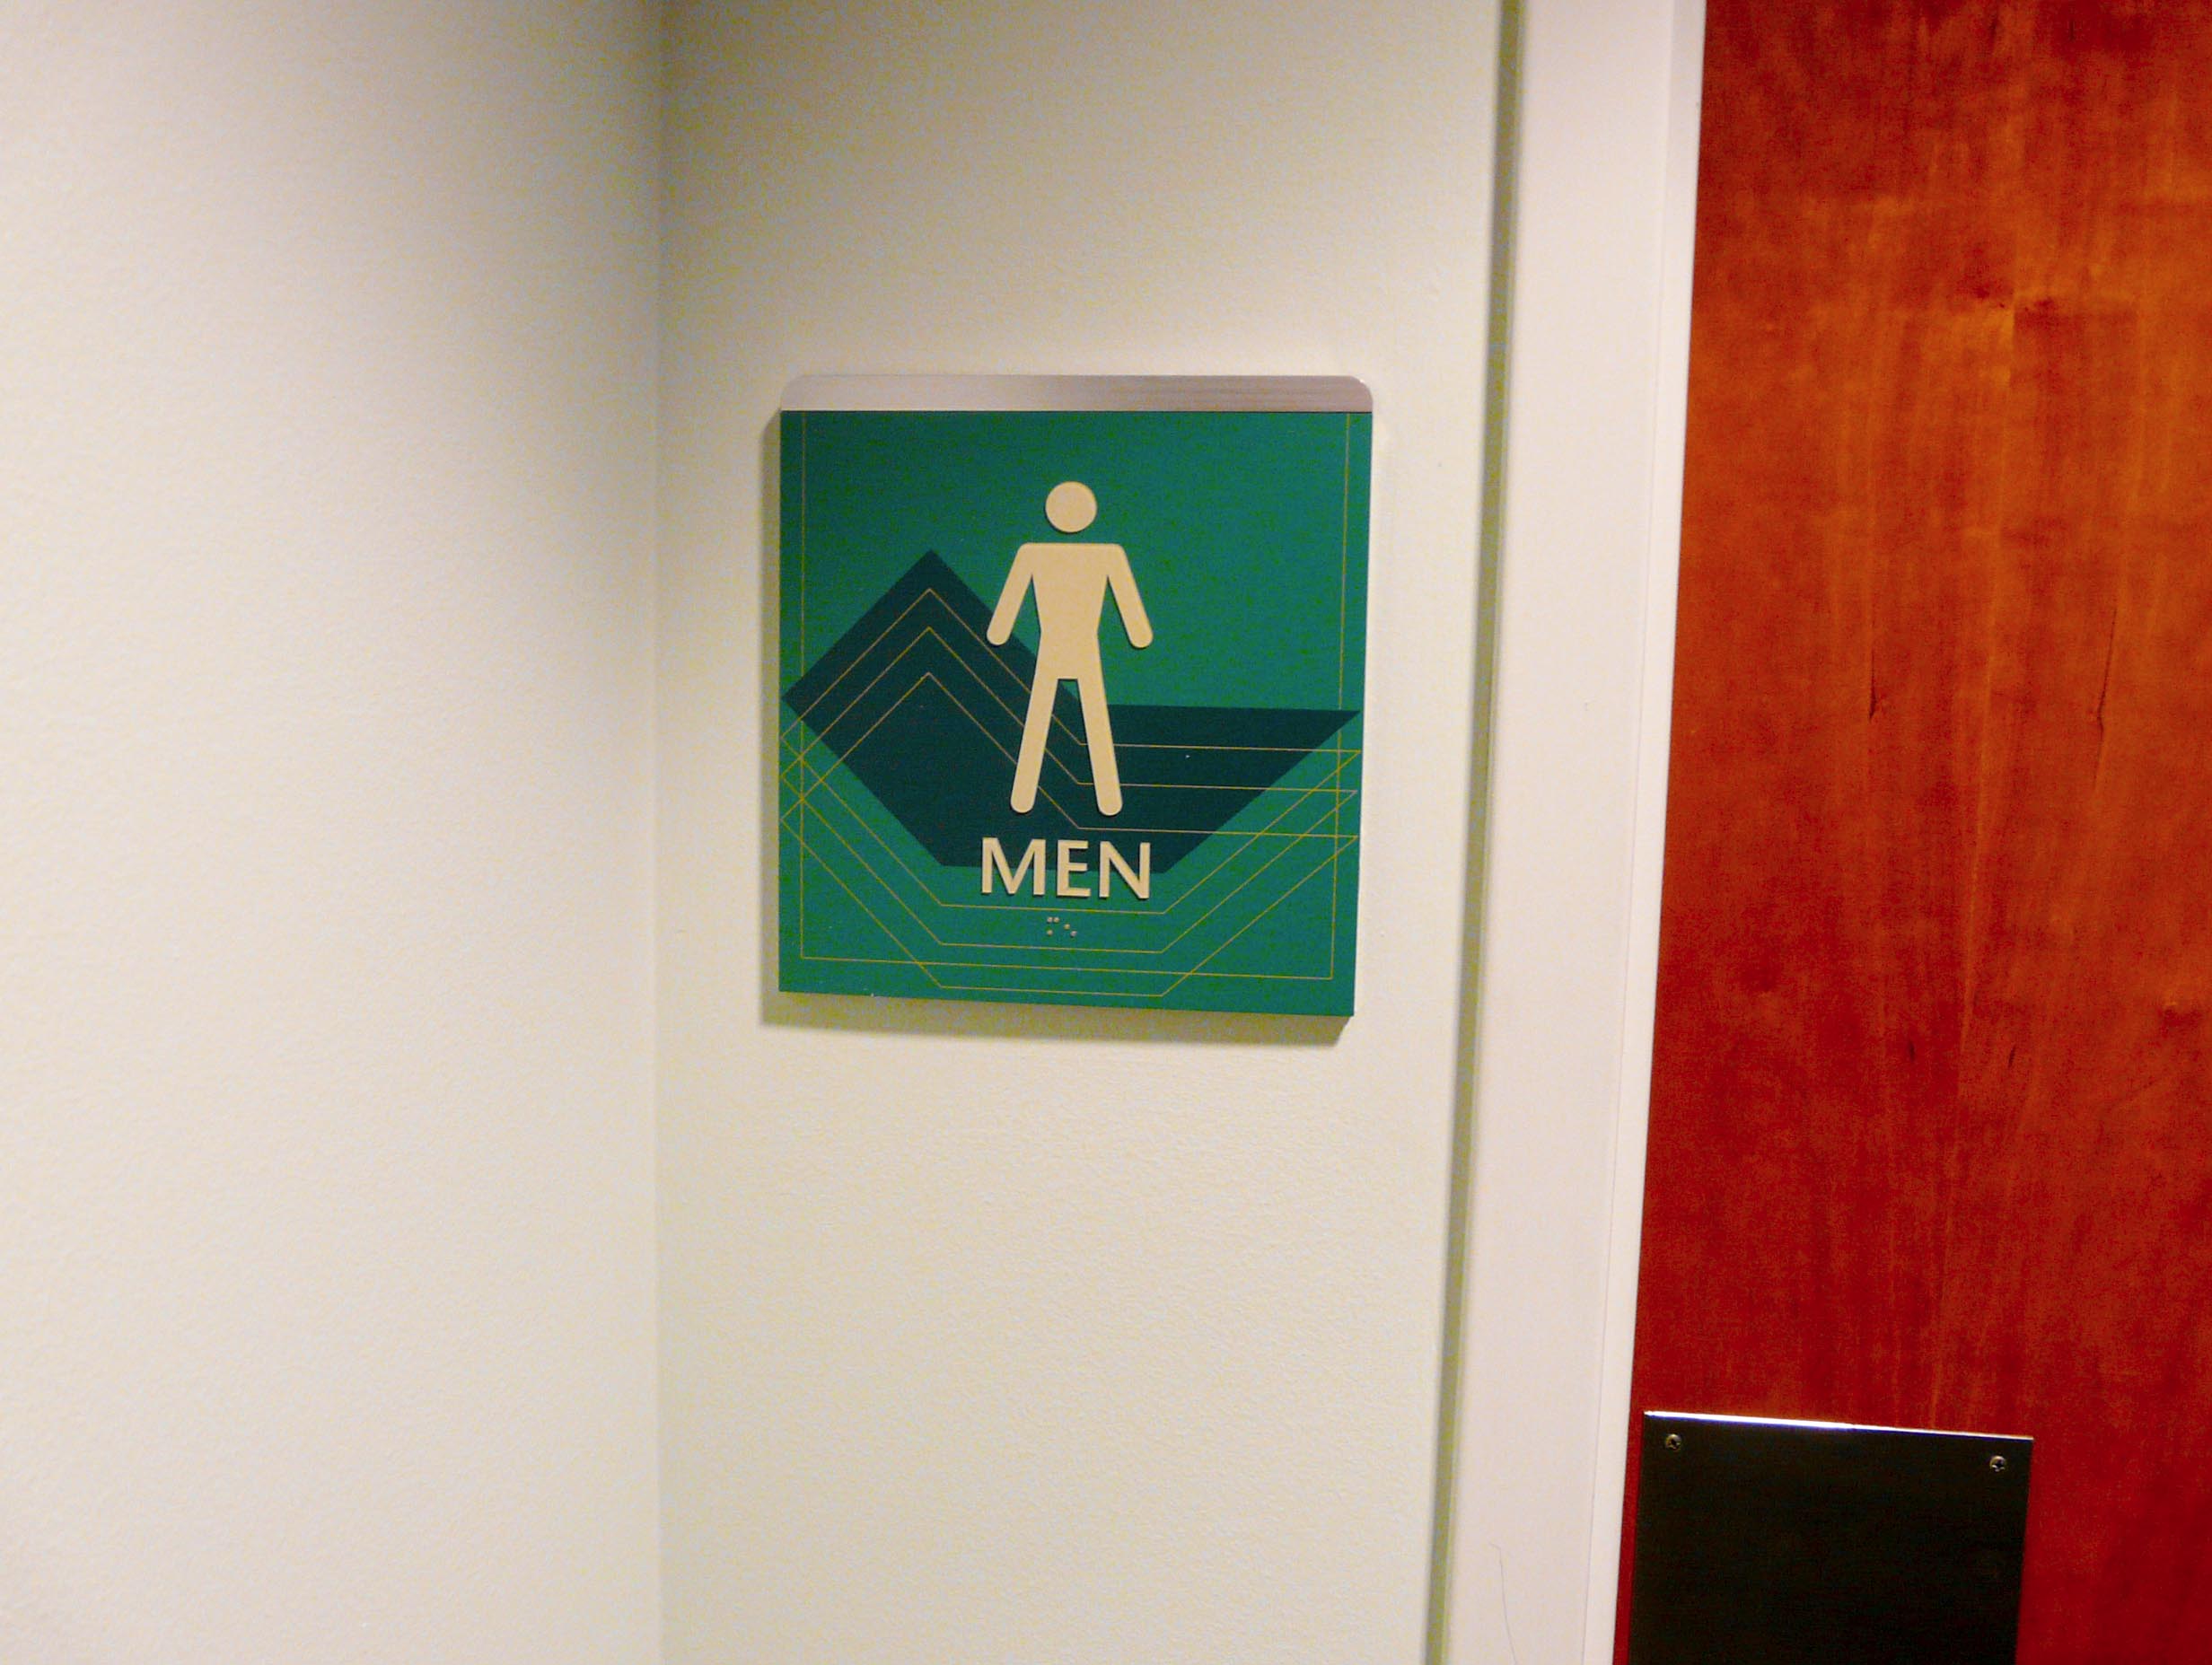 university bathroom sign wayfinding.jpg